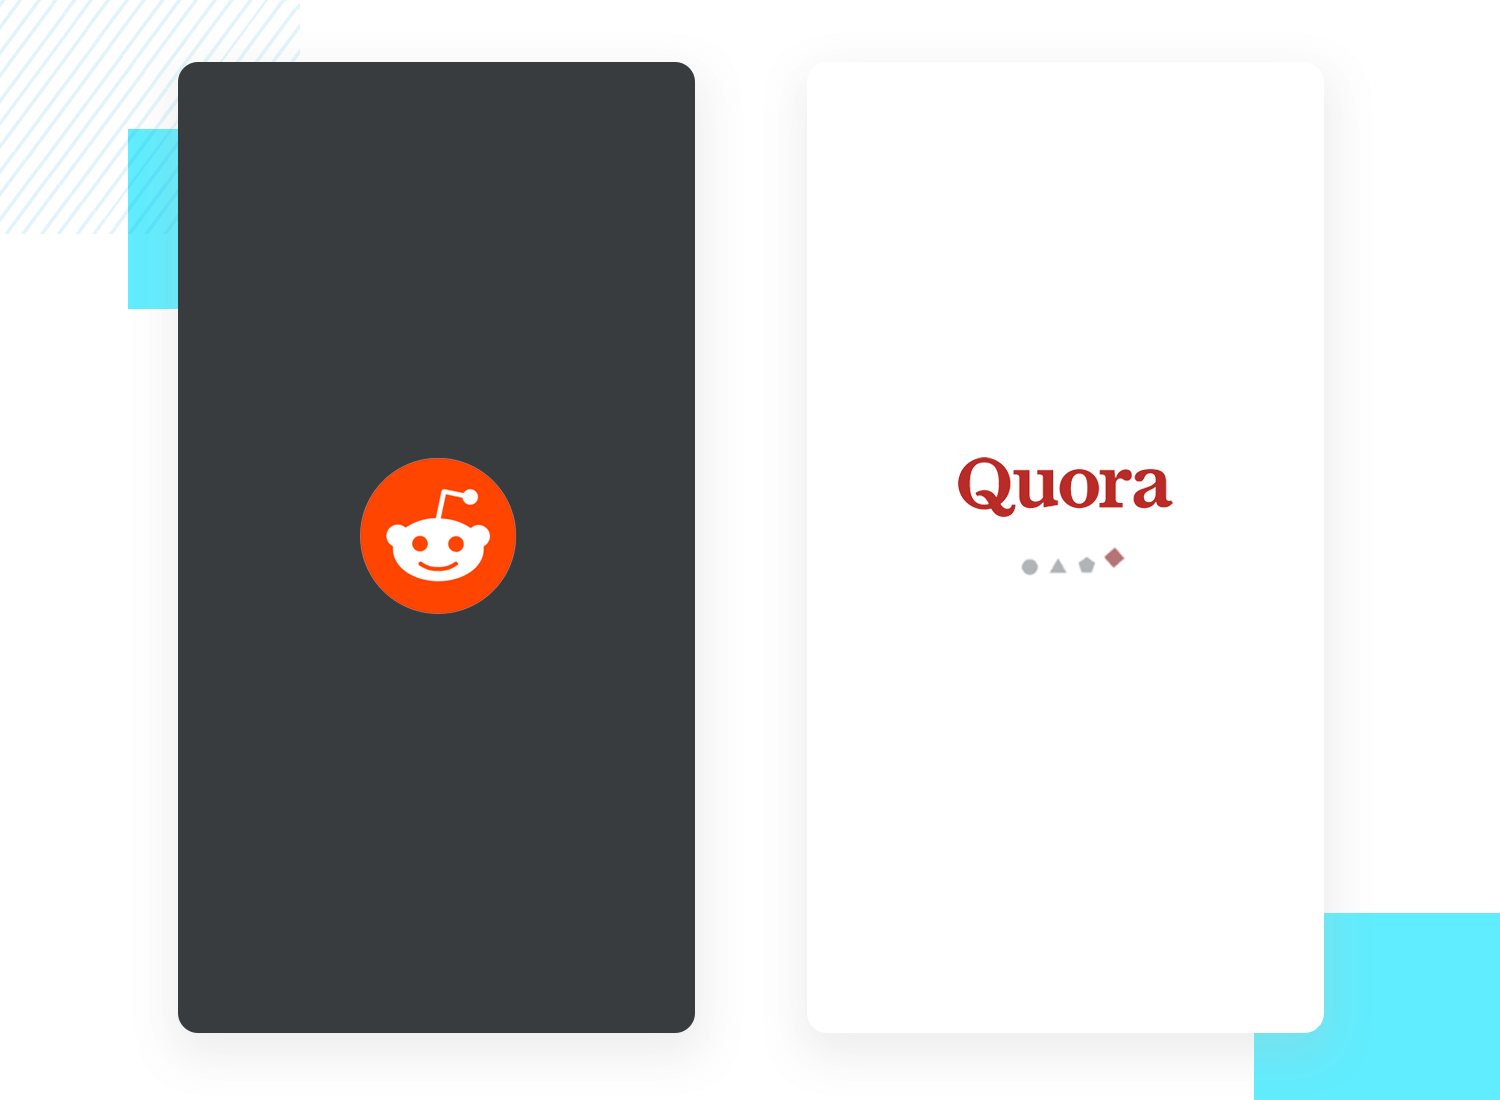 Reddit and Quora splash screen examples